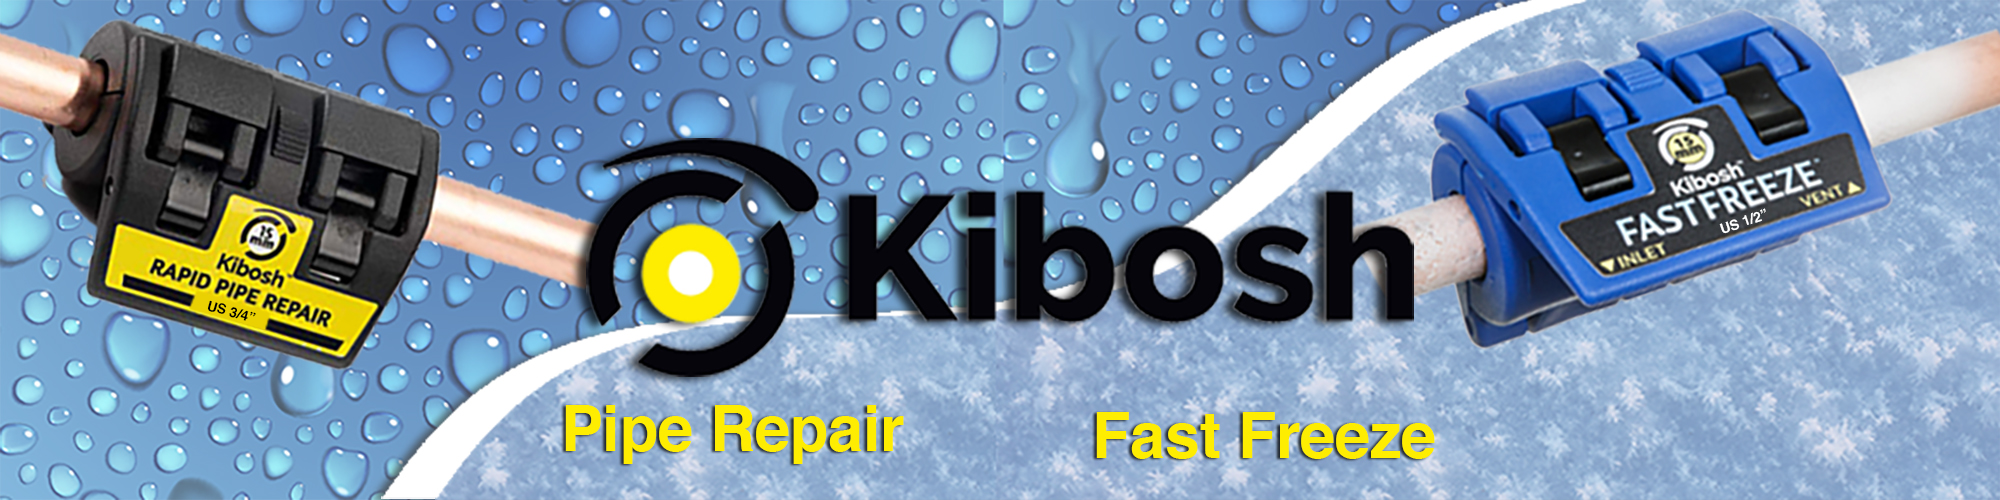 Kibosh Product Banner Page